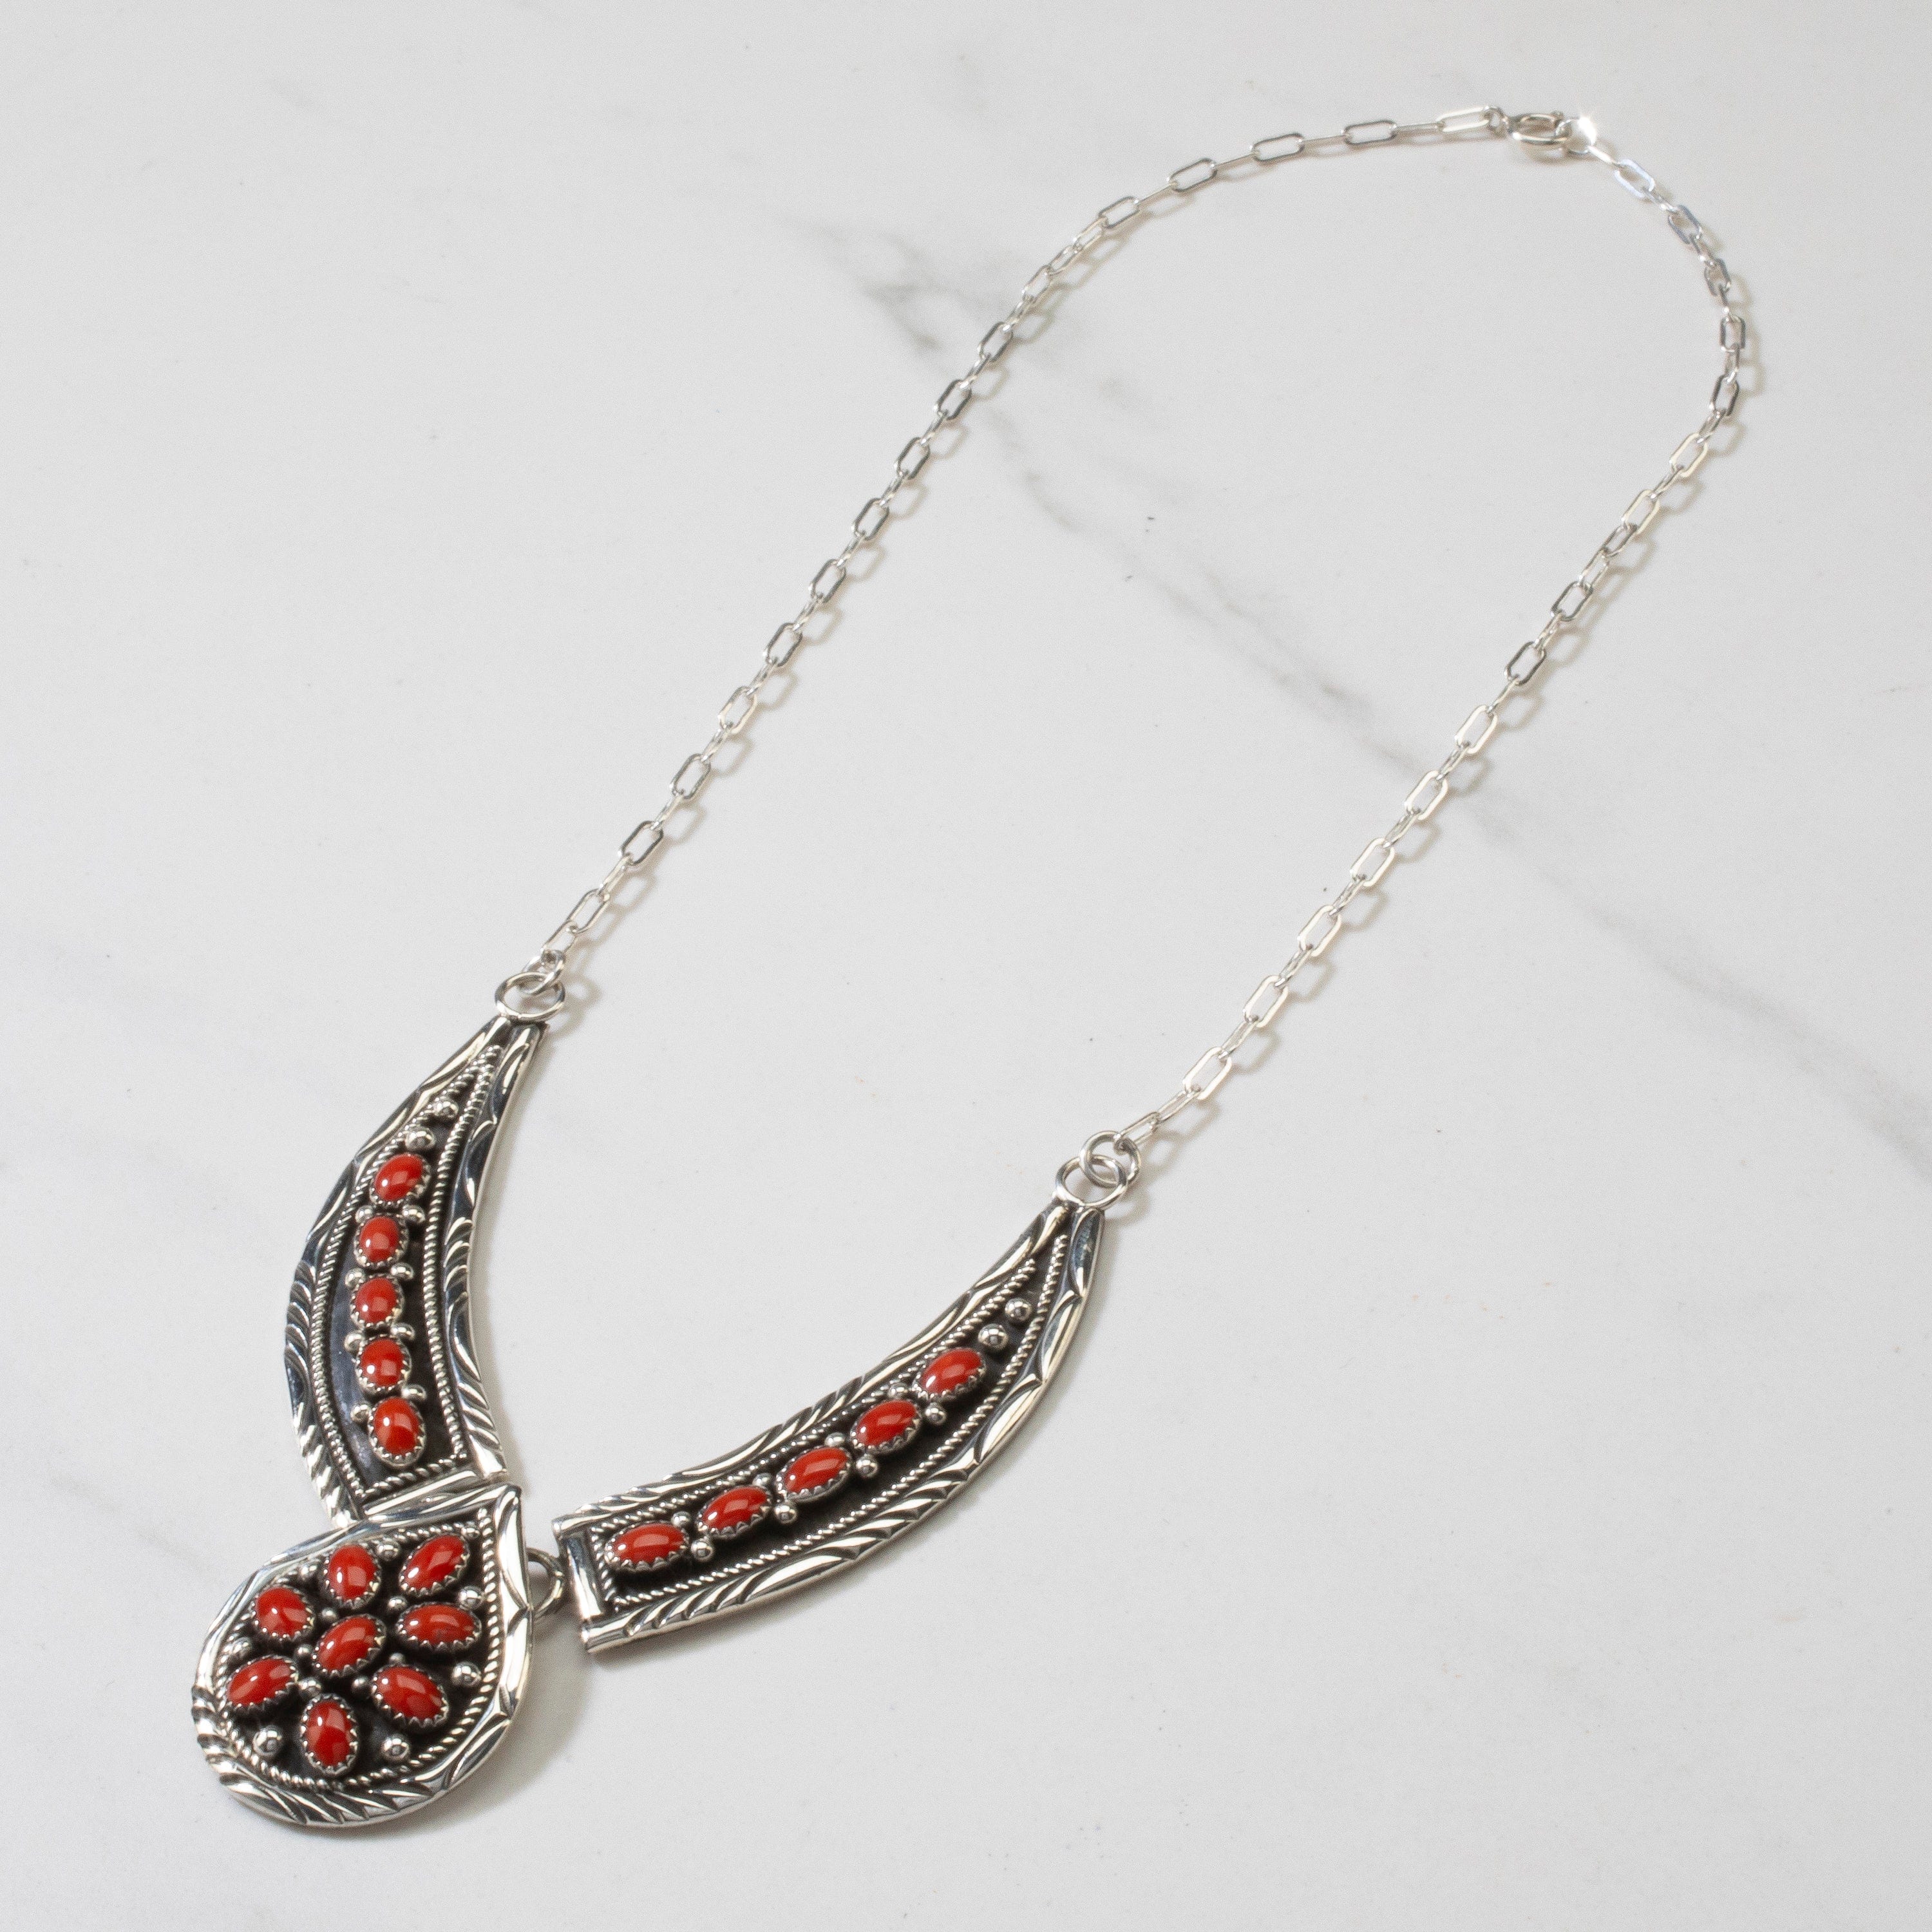 Navajo Native American Coral Jewelry Necklace C4643-04 - Adobe